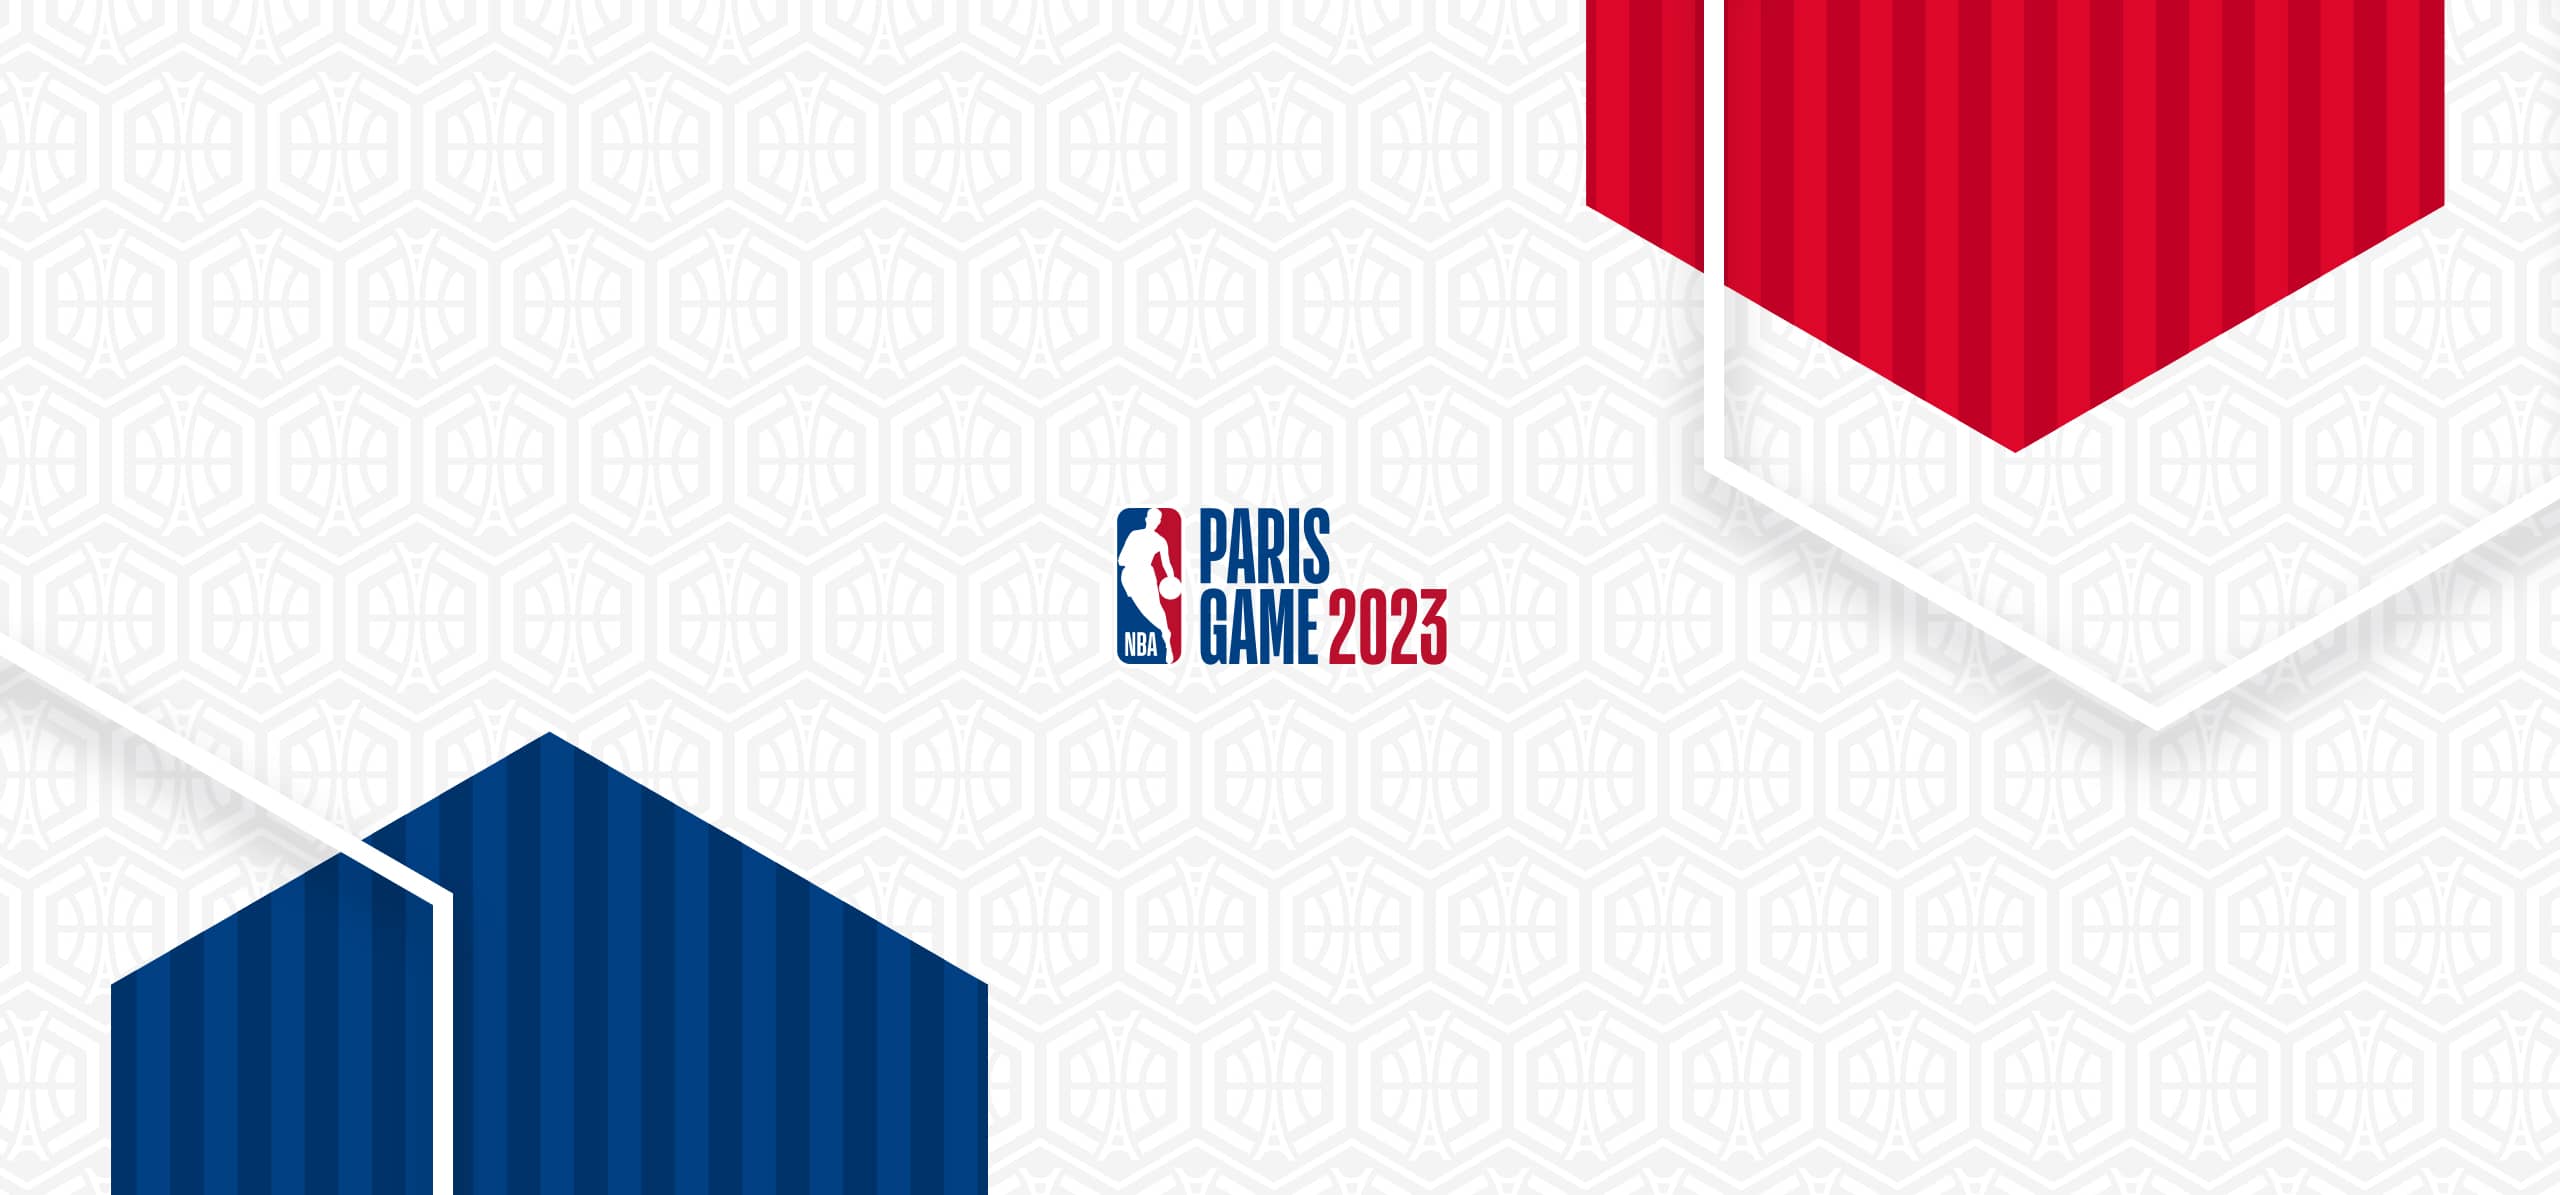 GANA UN VIAJE AL NBA PARIS GAME 2023